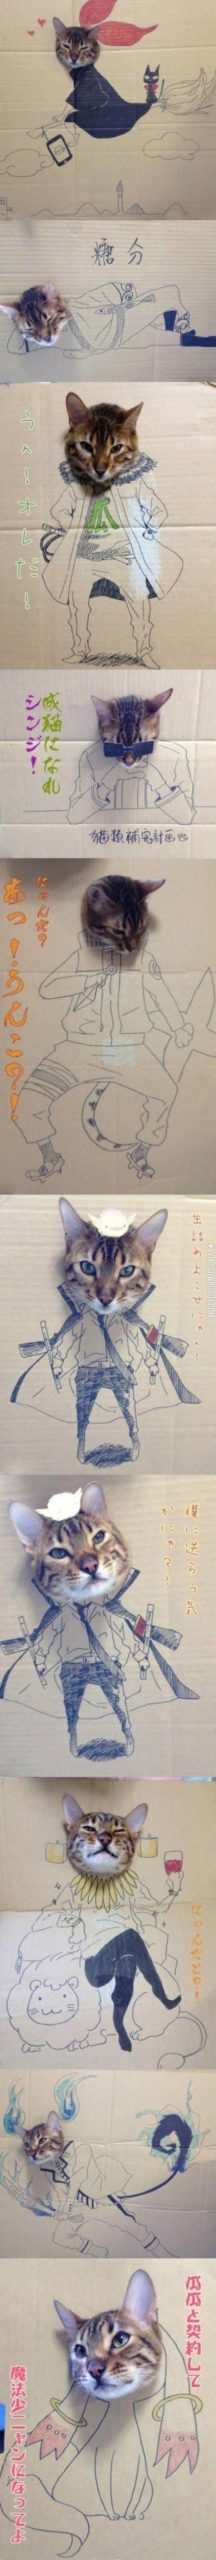 Cats+in+cardboard.